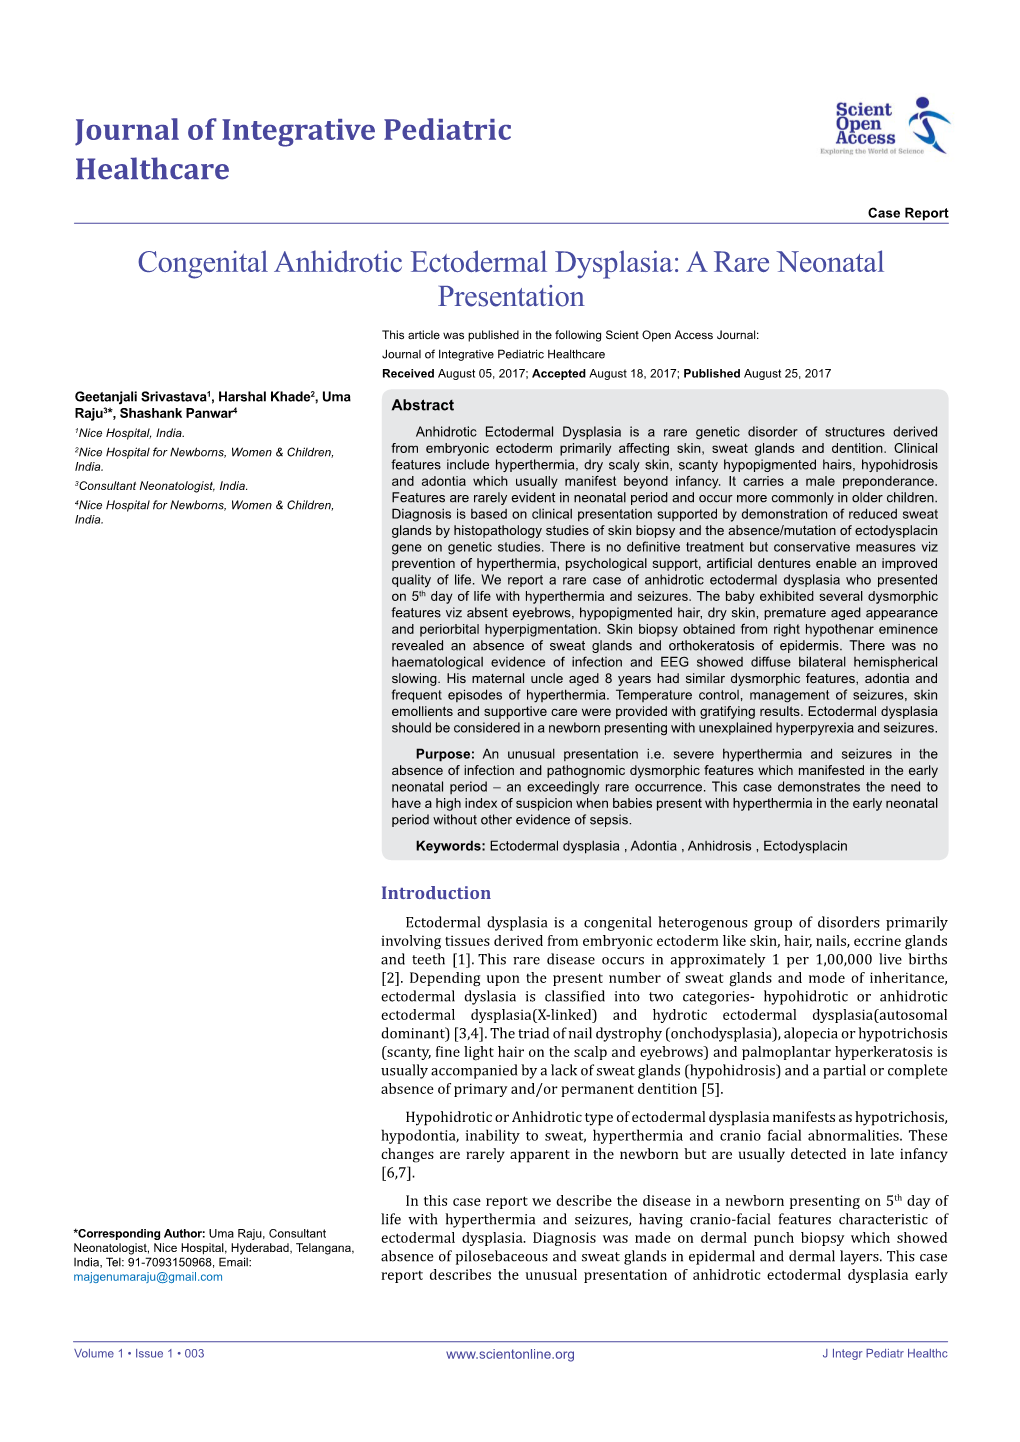 Congenital Anhidrotic Ectodermal Dysplasia: a Rare Neonatal Presentation